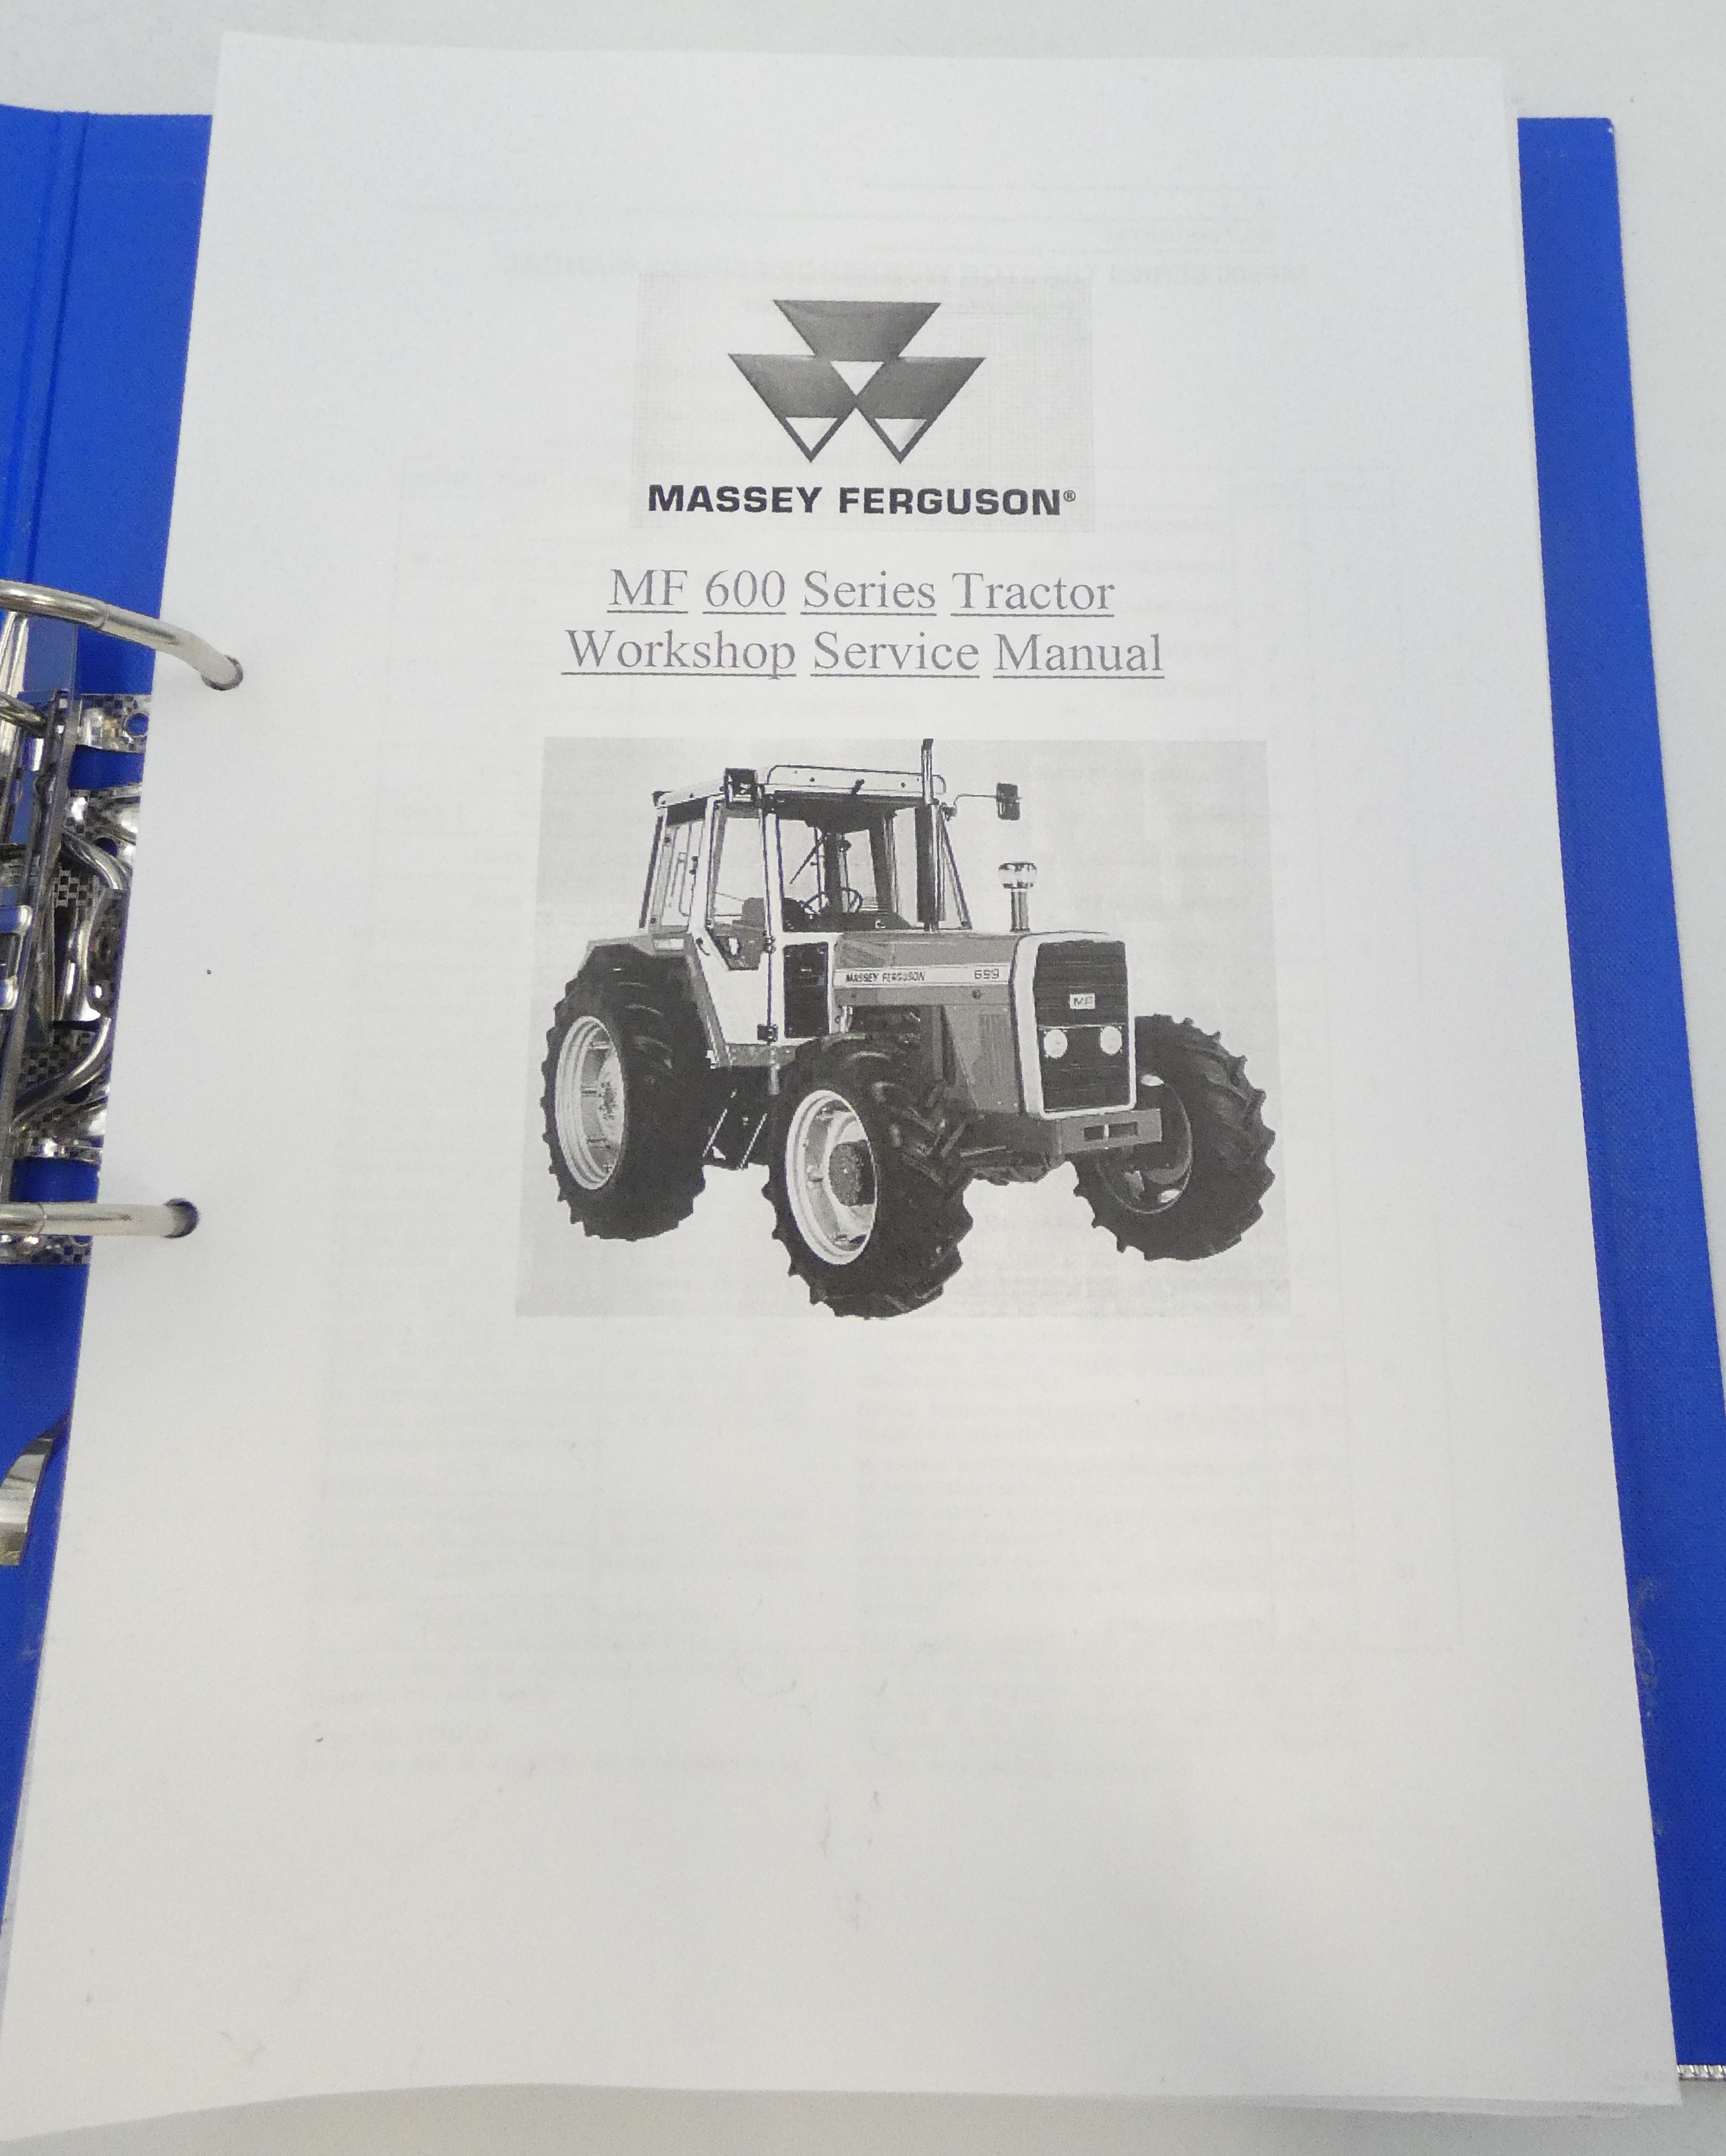 Massey Ferguson MF600 series tractor workshop service manual